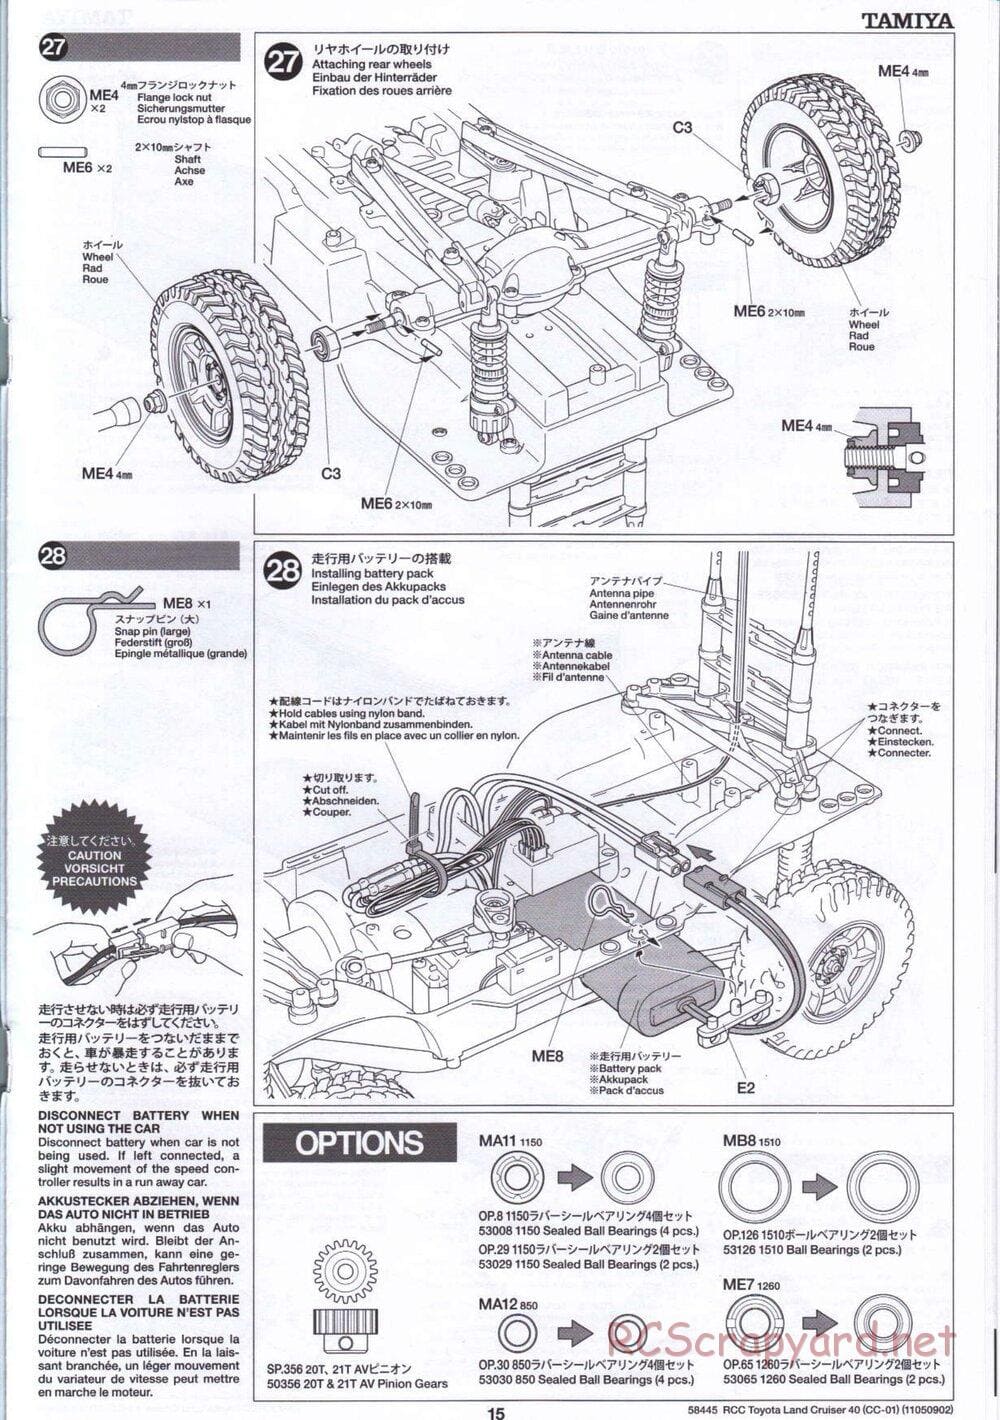 Tamiya - Toyota Land Cruiser 40 - CC-01 Chassis - Manual - Page 15